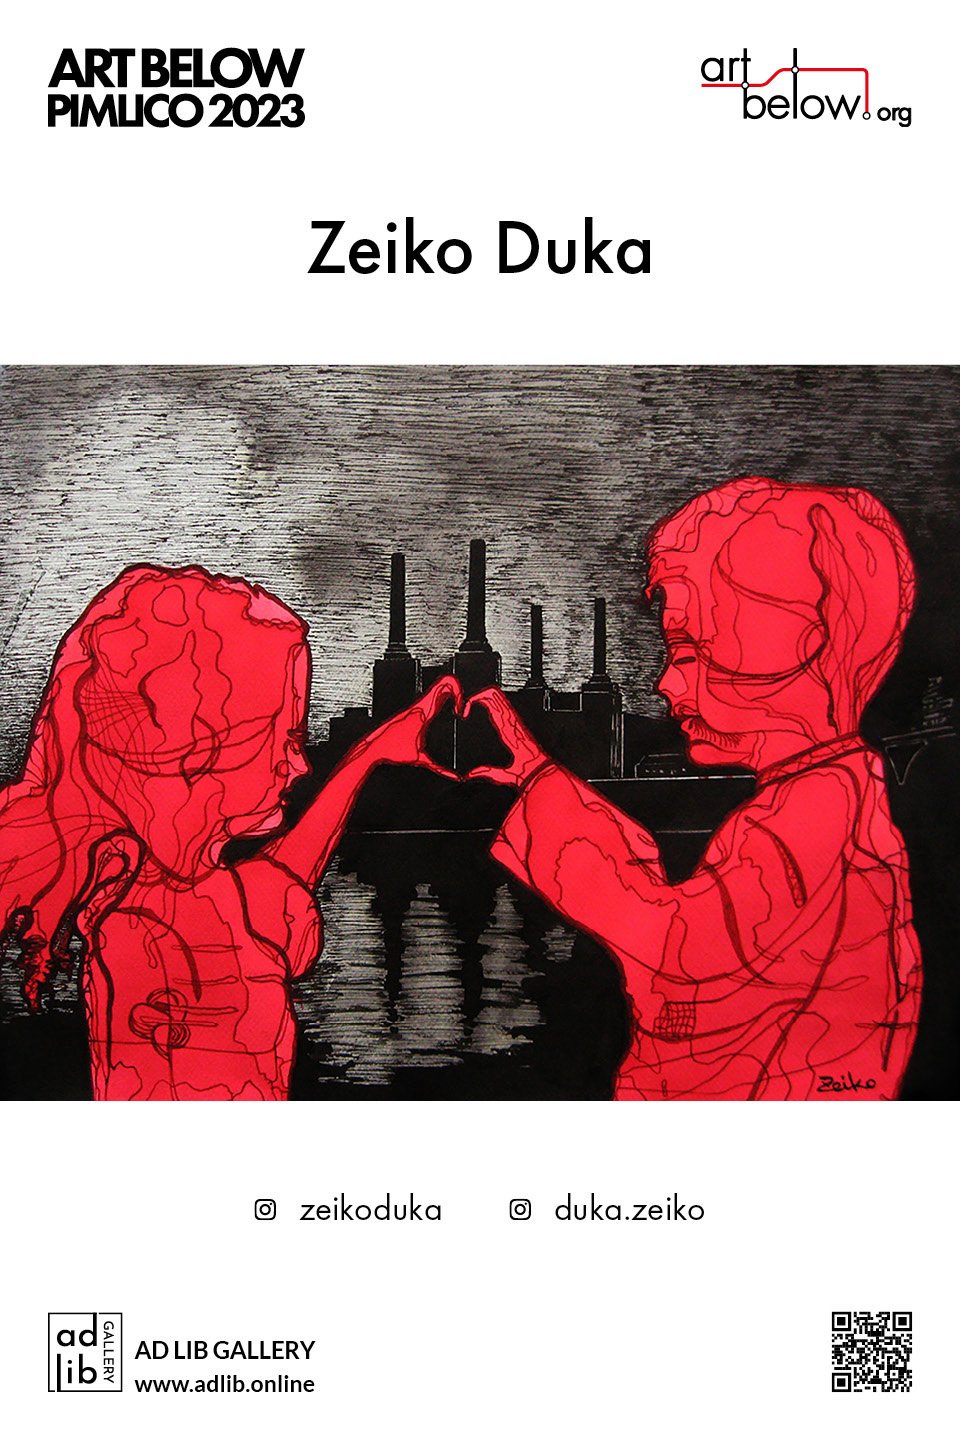 Zeiko-duka-ad-lib-gallery-poster.jpg